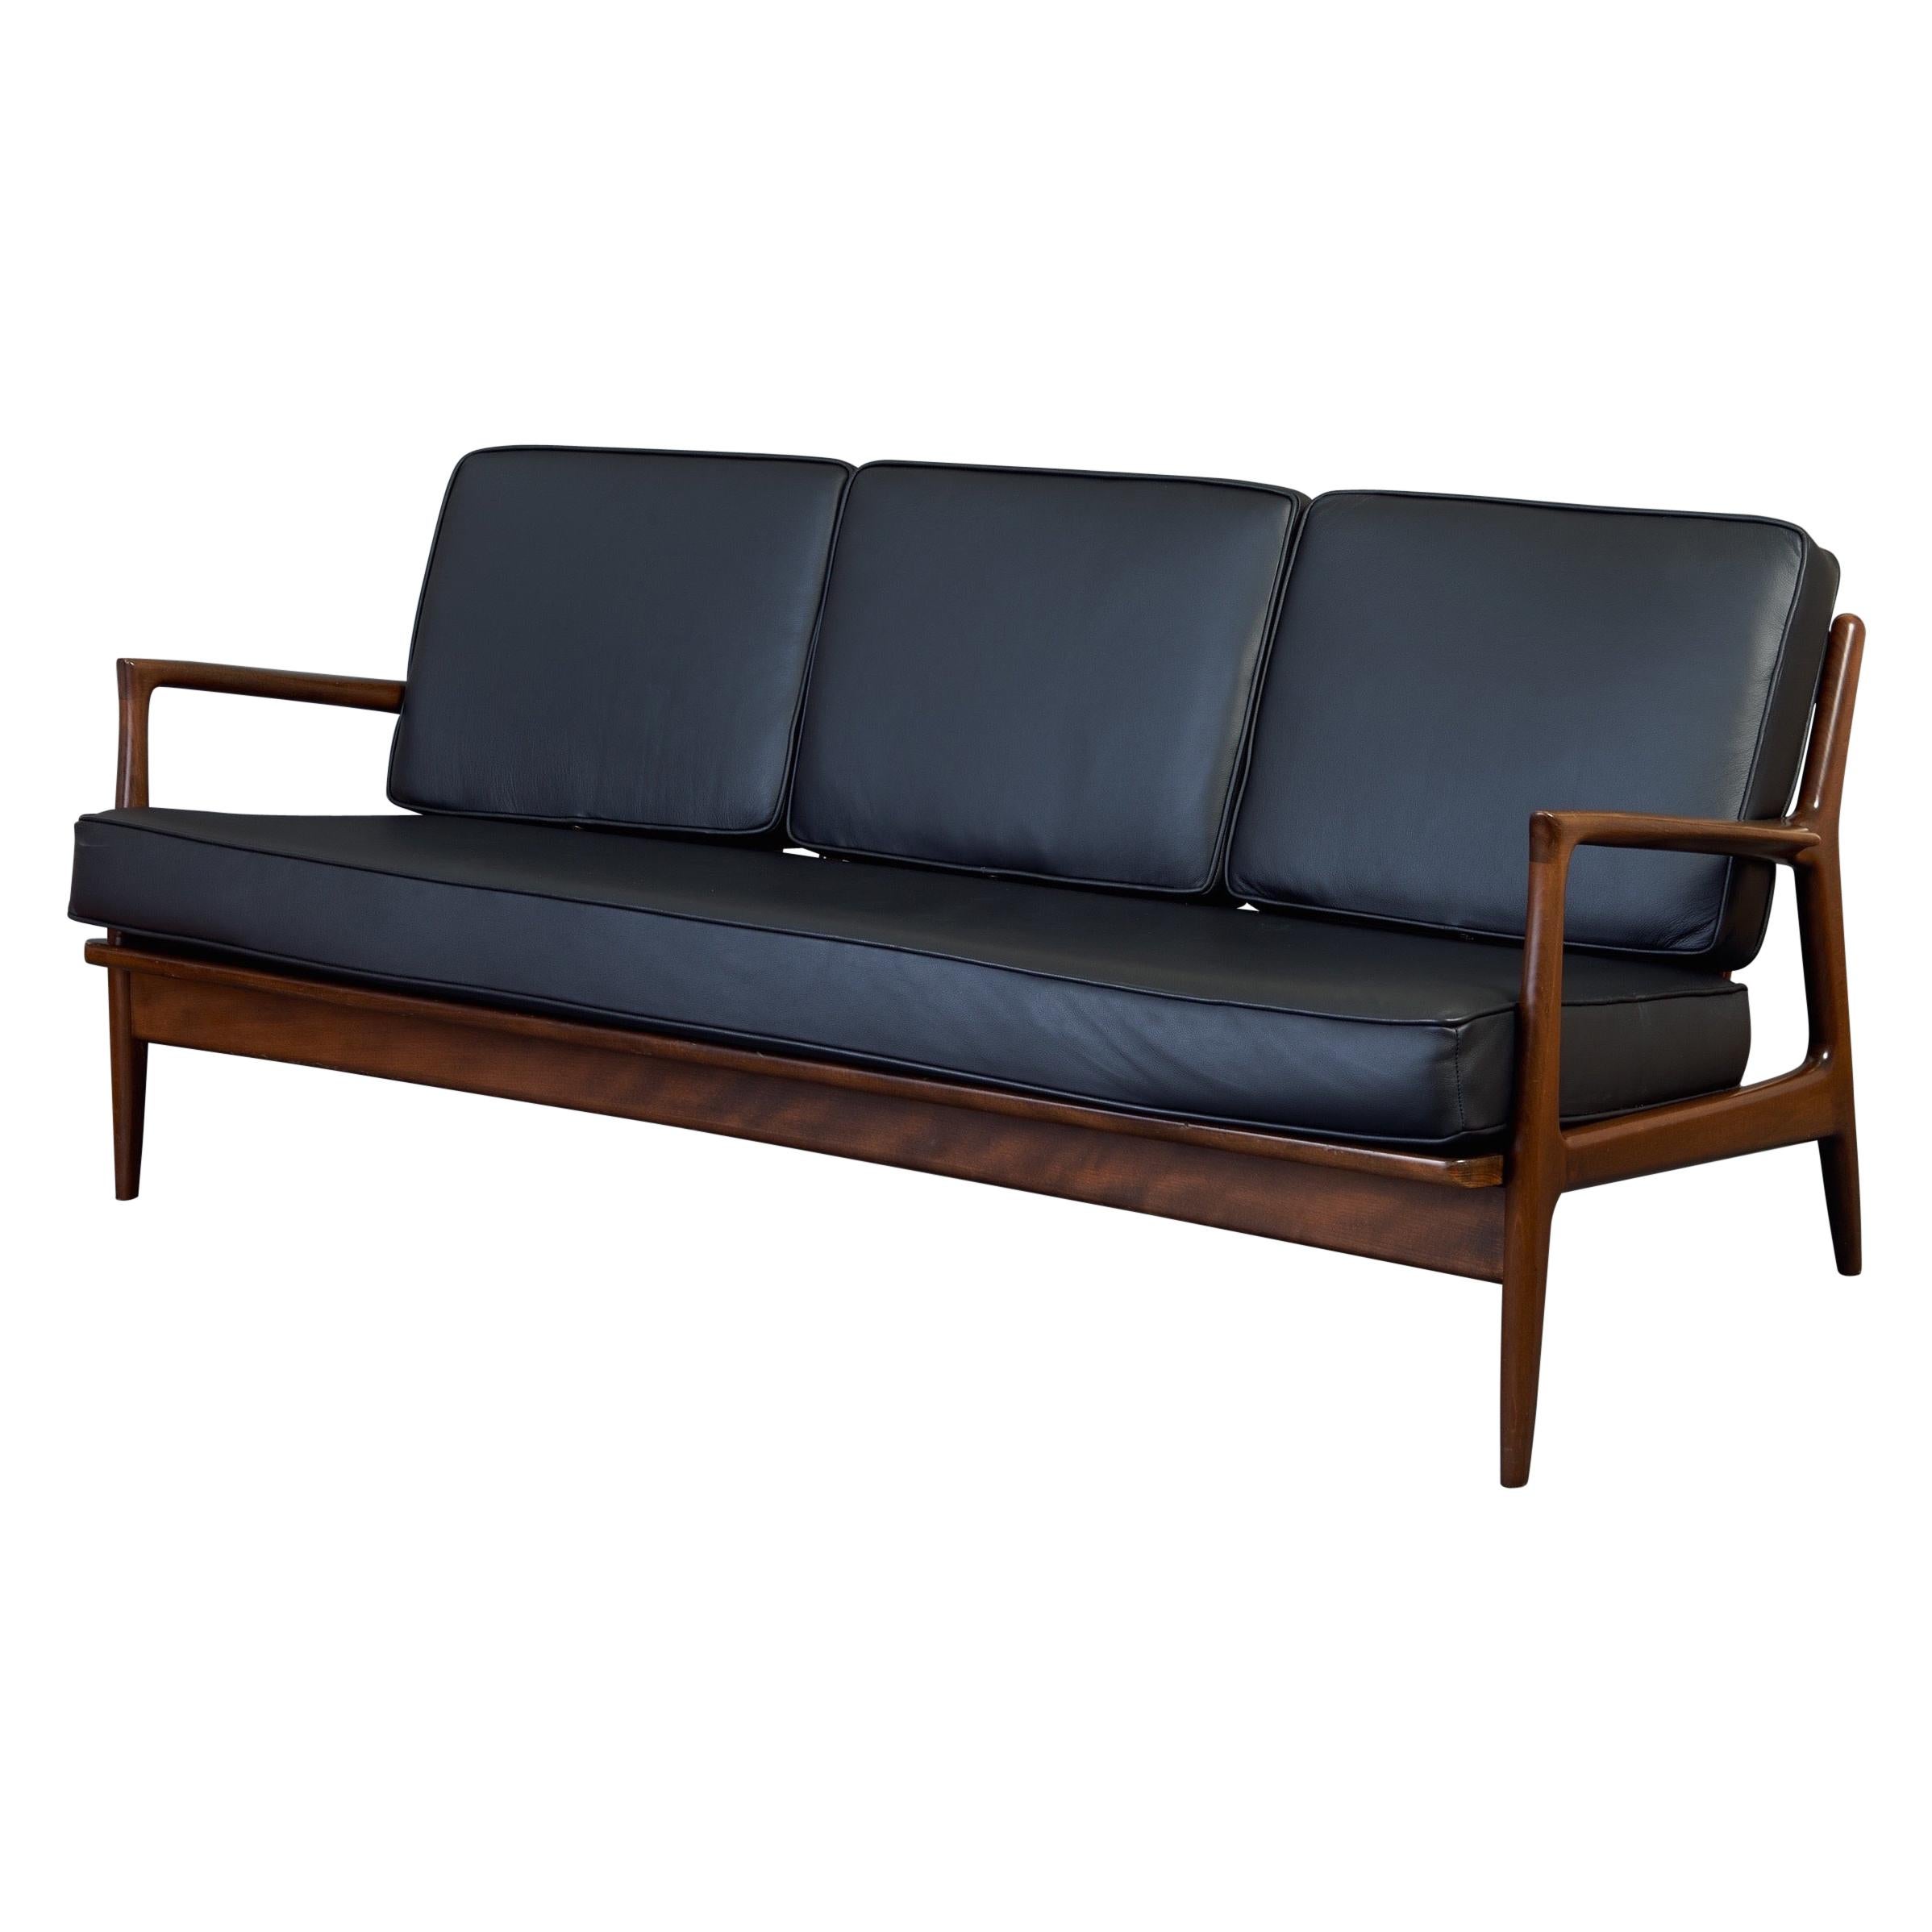 Sleek Danish Modern Sofa by Ib Kofod-Larsen in Teak and Black Leather, 1950s For Sale